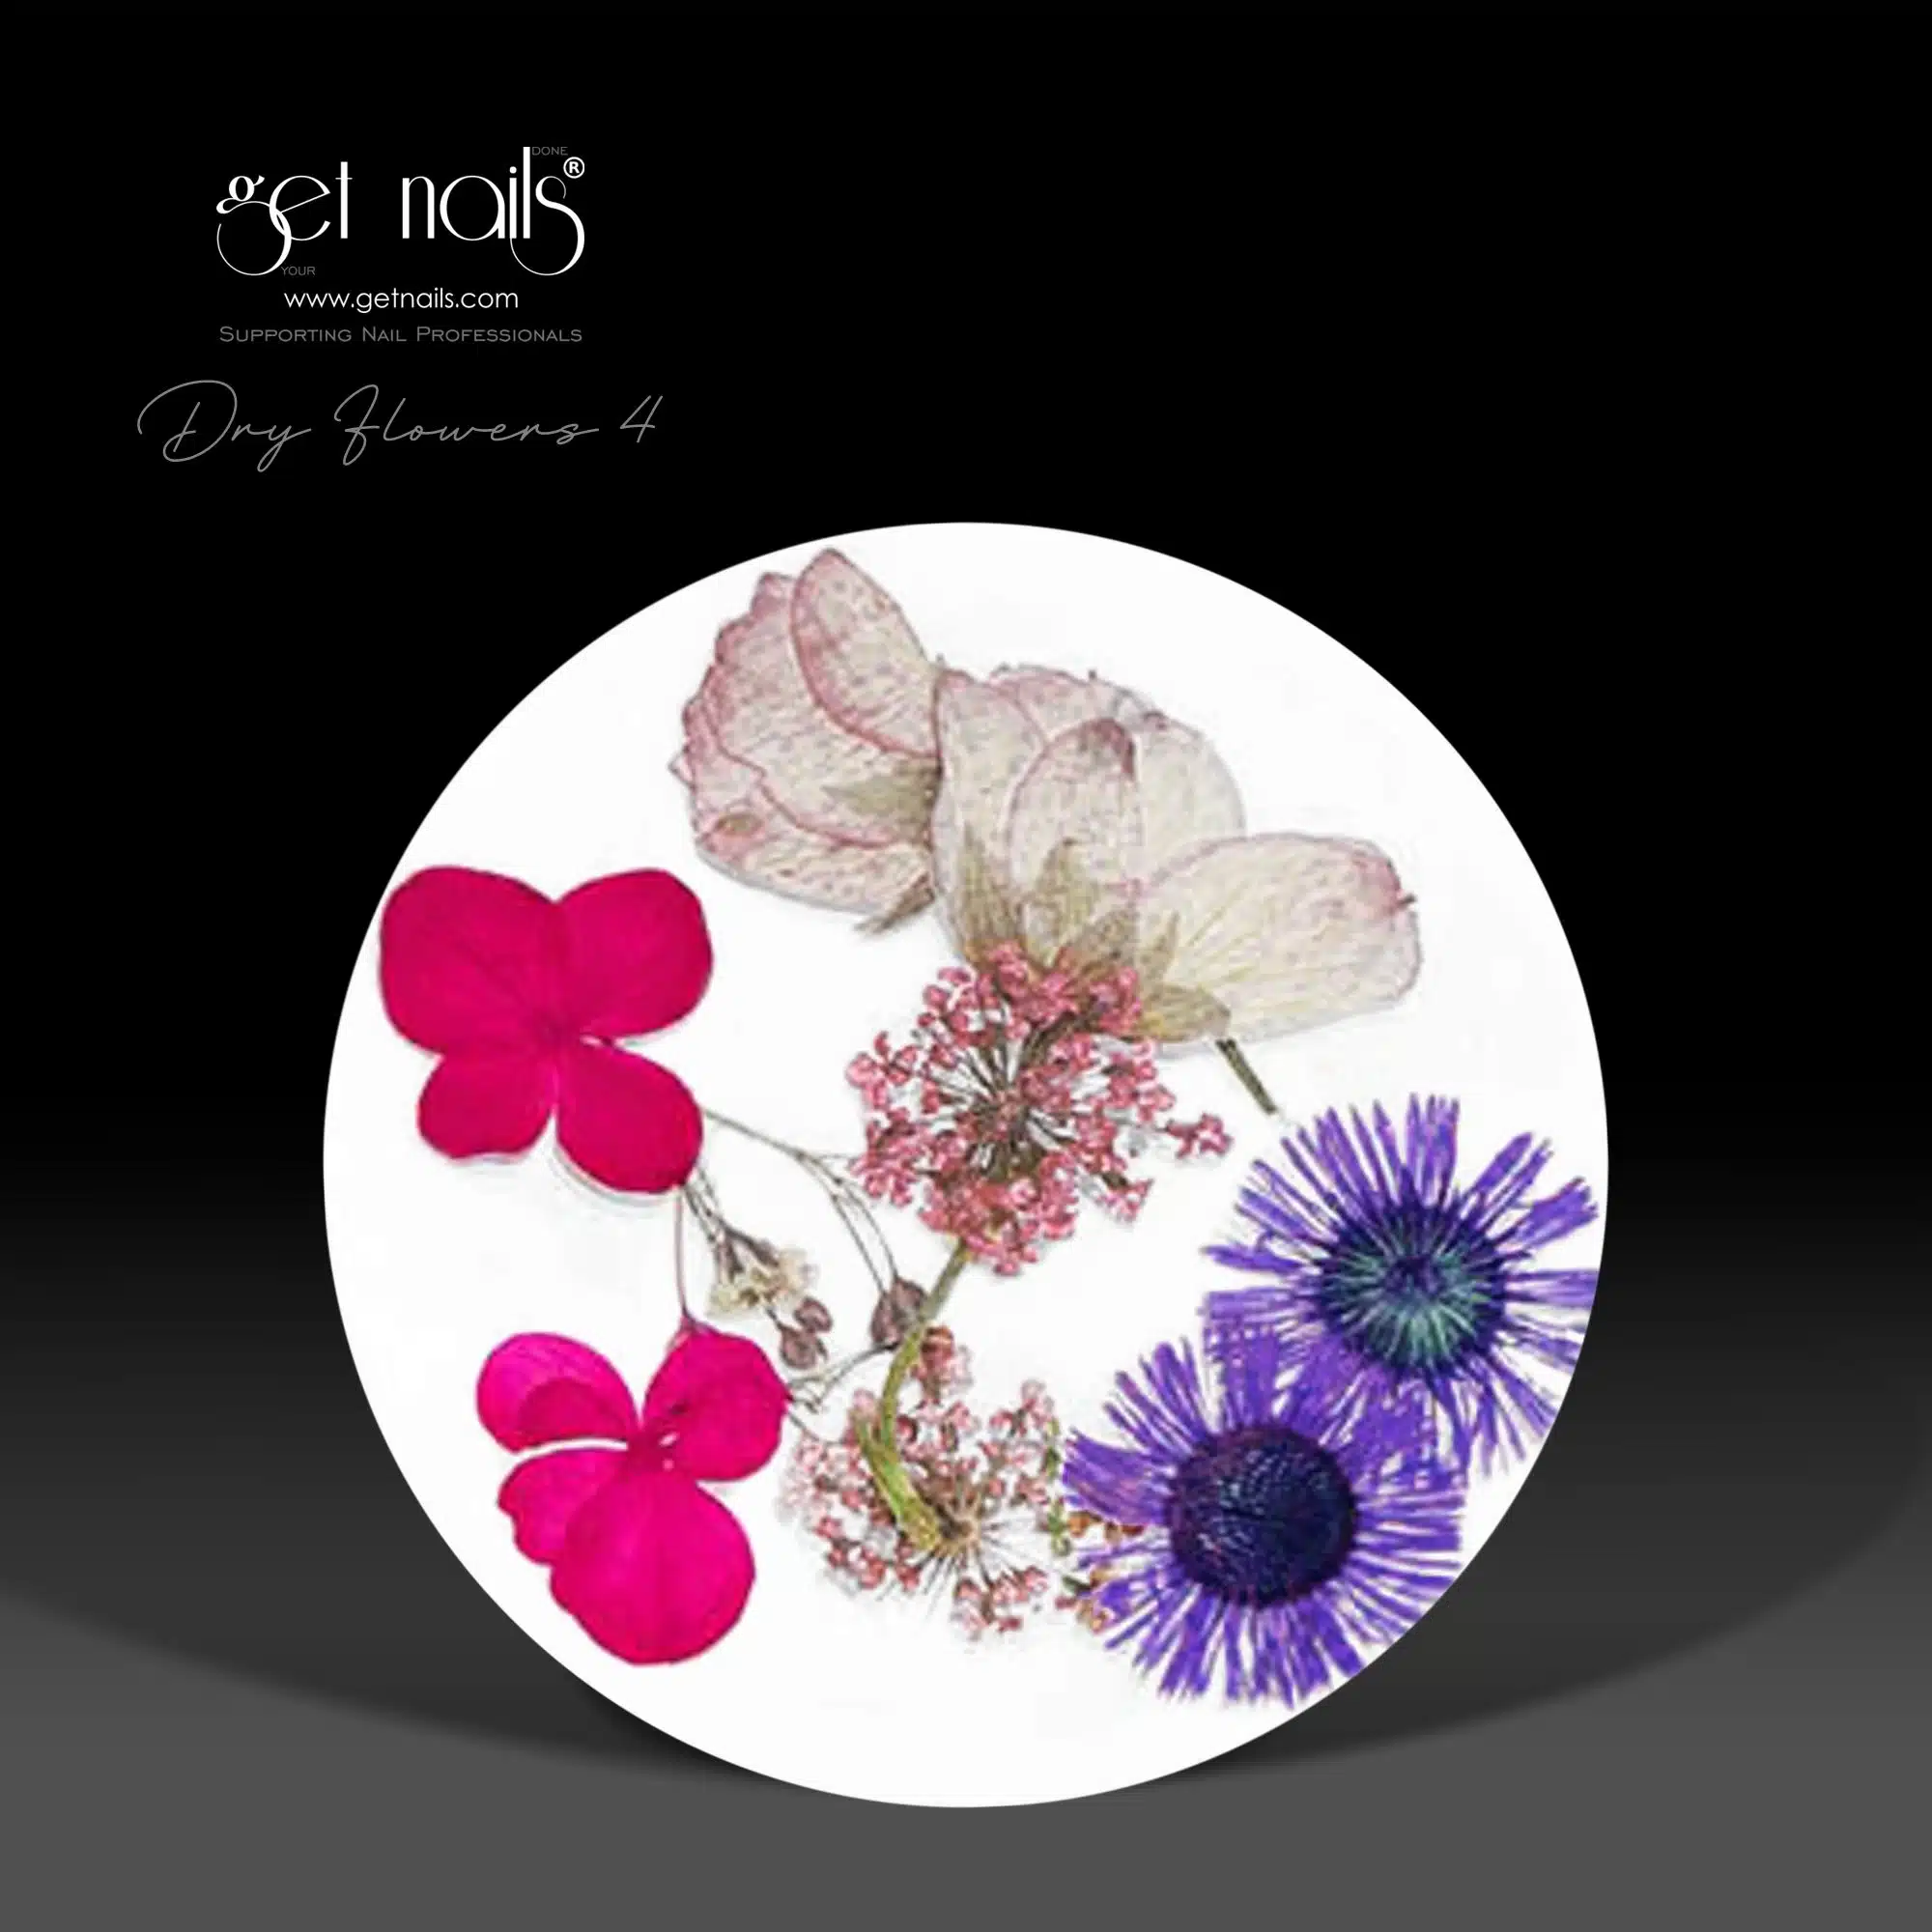 Get Nails Austria – Dry Flowers 4